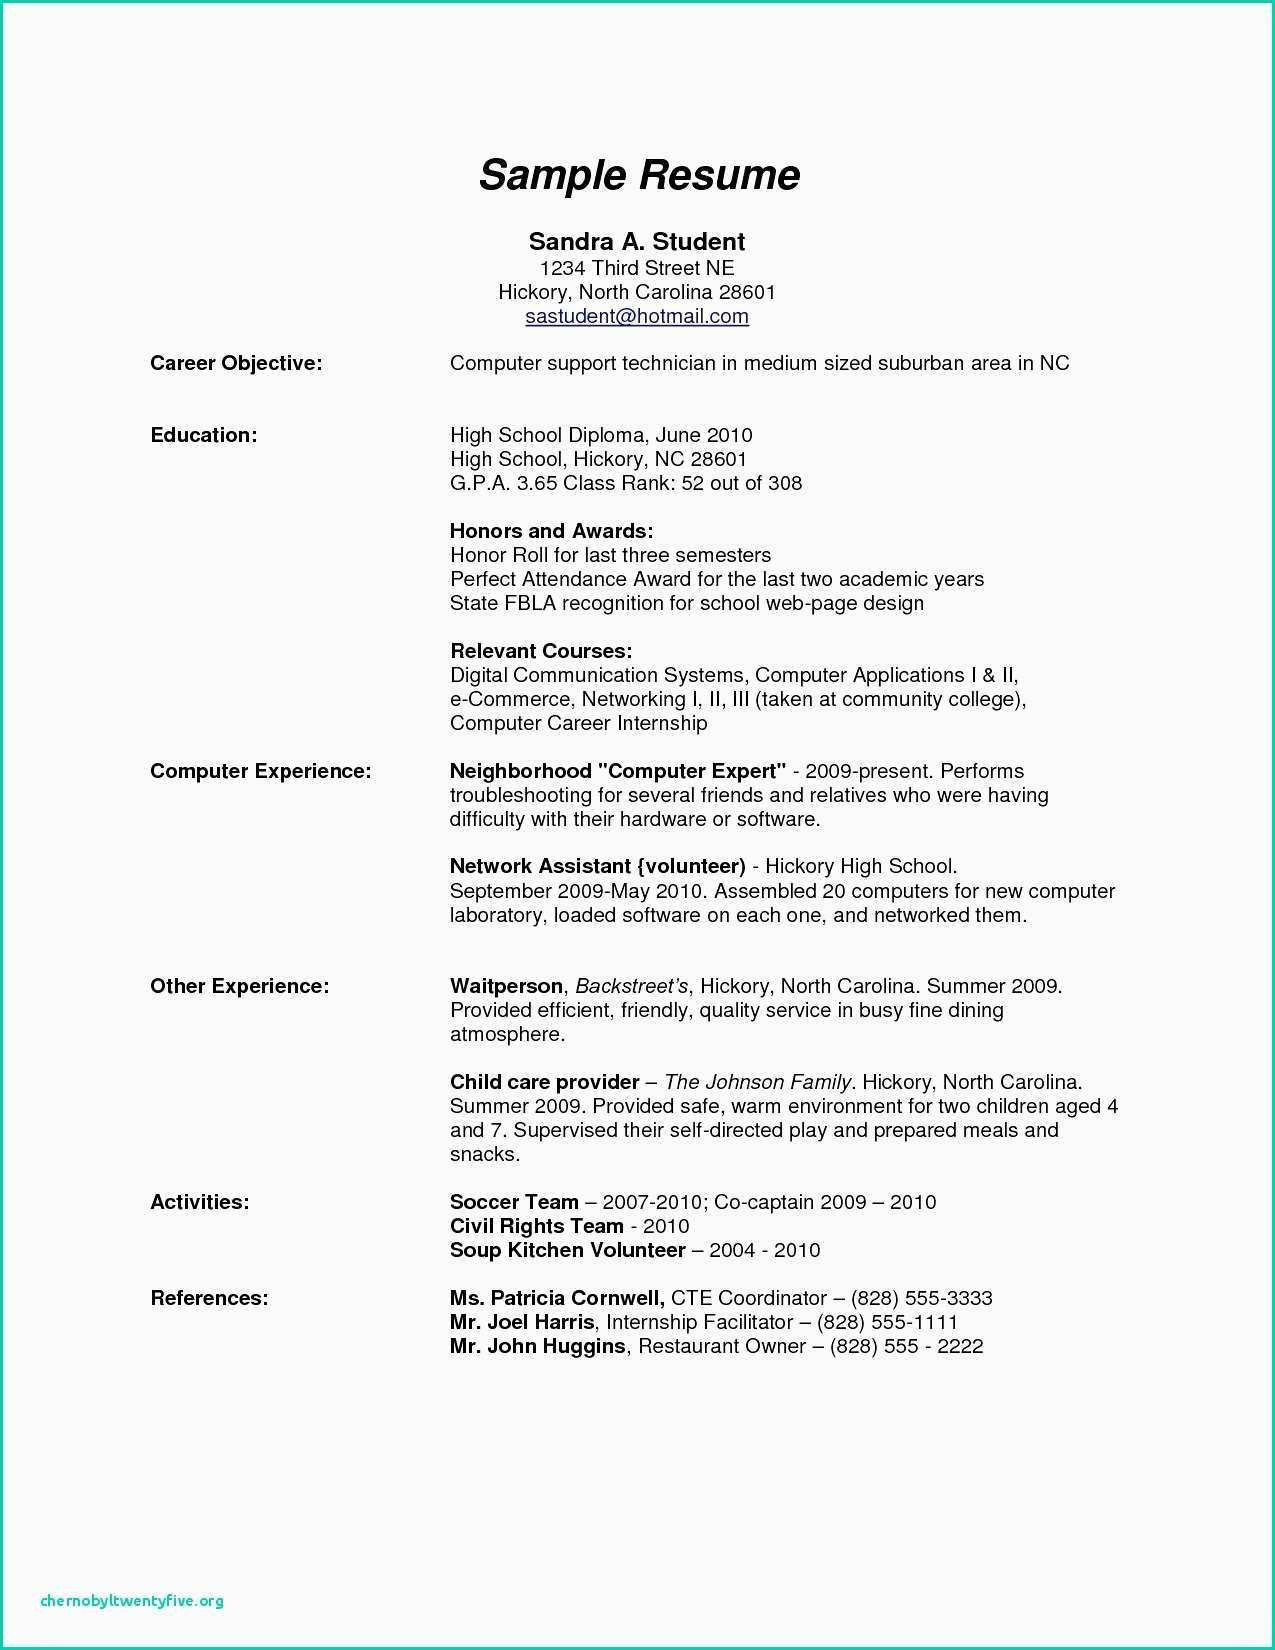 high school diploma on resume examplesml